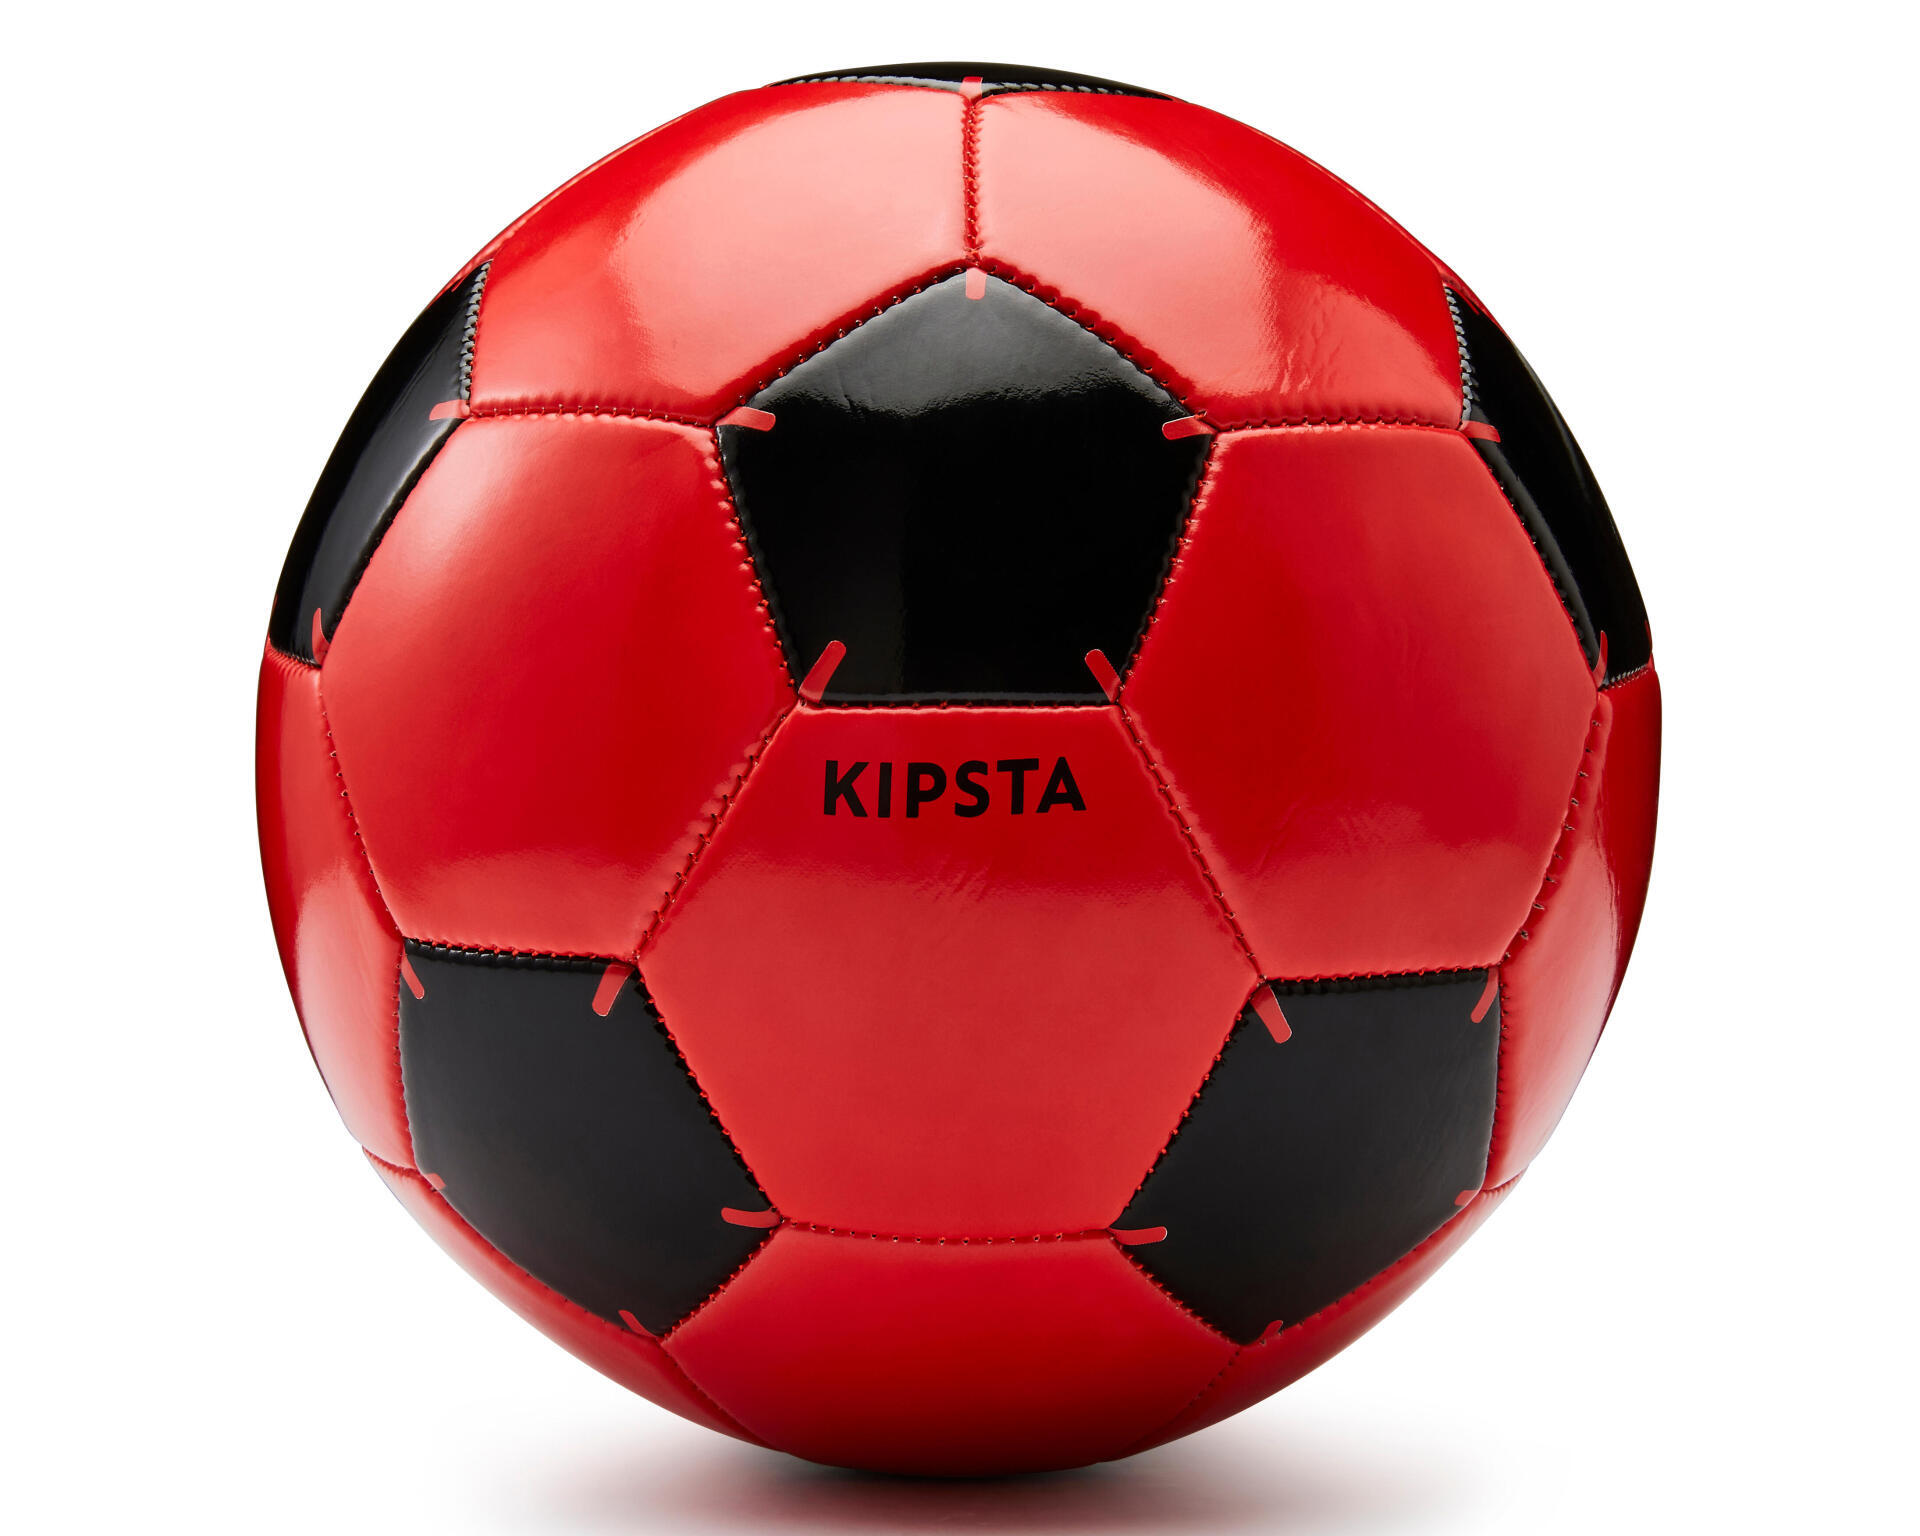 Kipsta First Kick S4